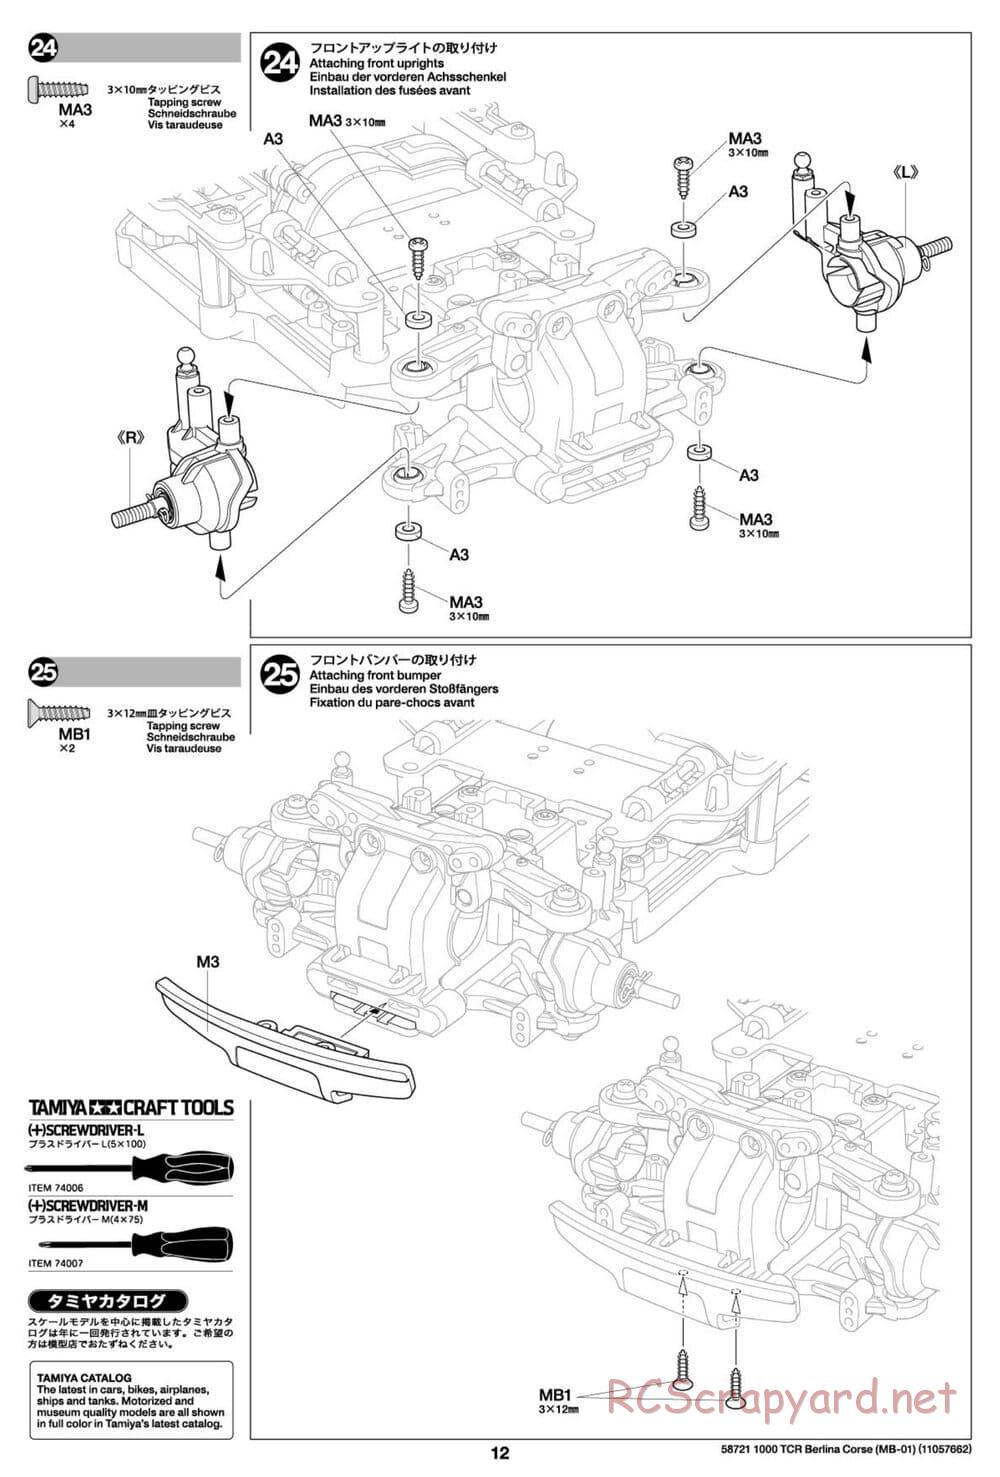 Tamiya - Fiat Abarth 1000 TCR Berlina Corsa - MB-01 Chassis - Manual - Page 12